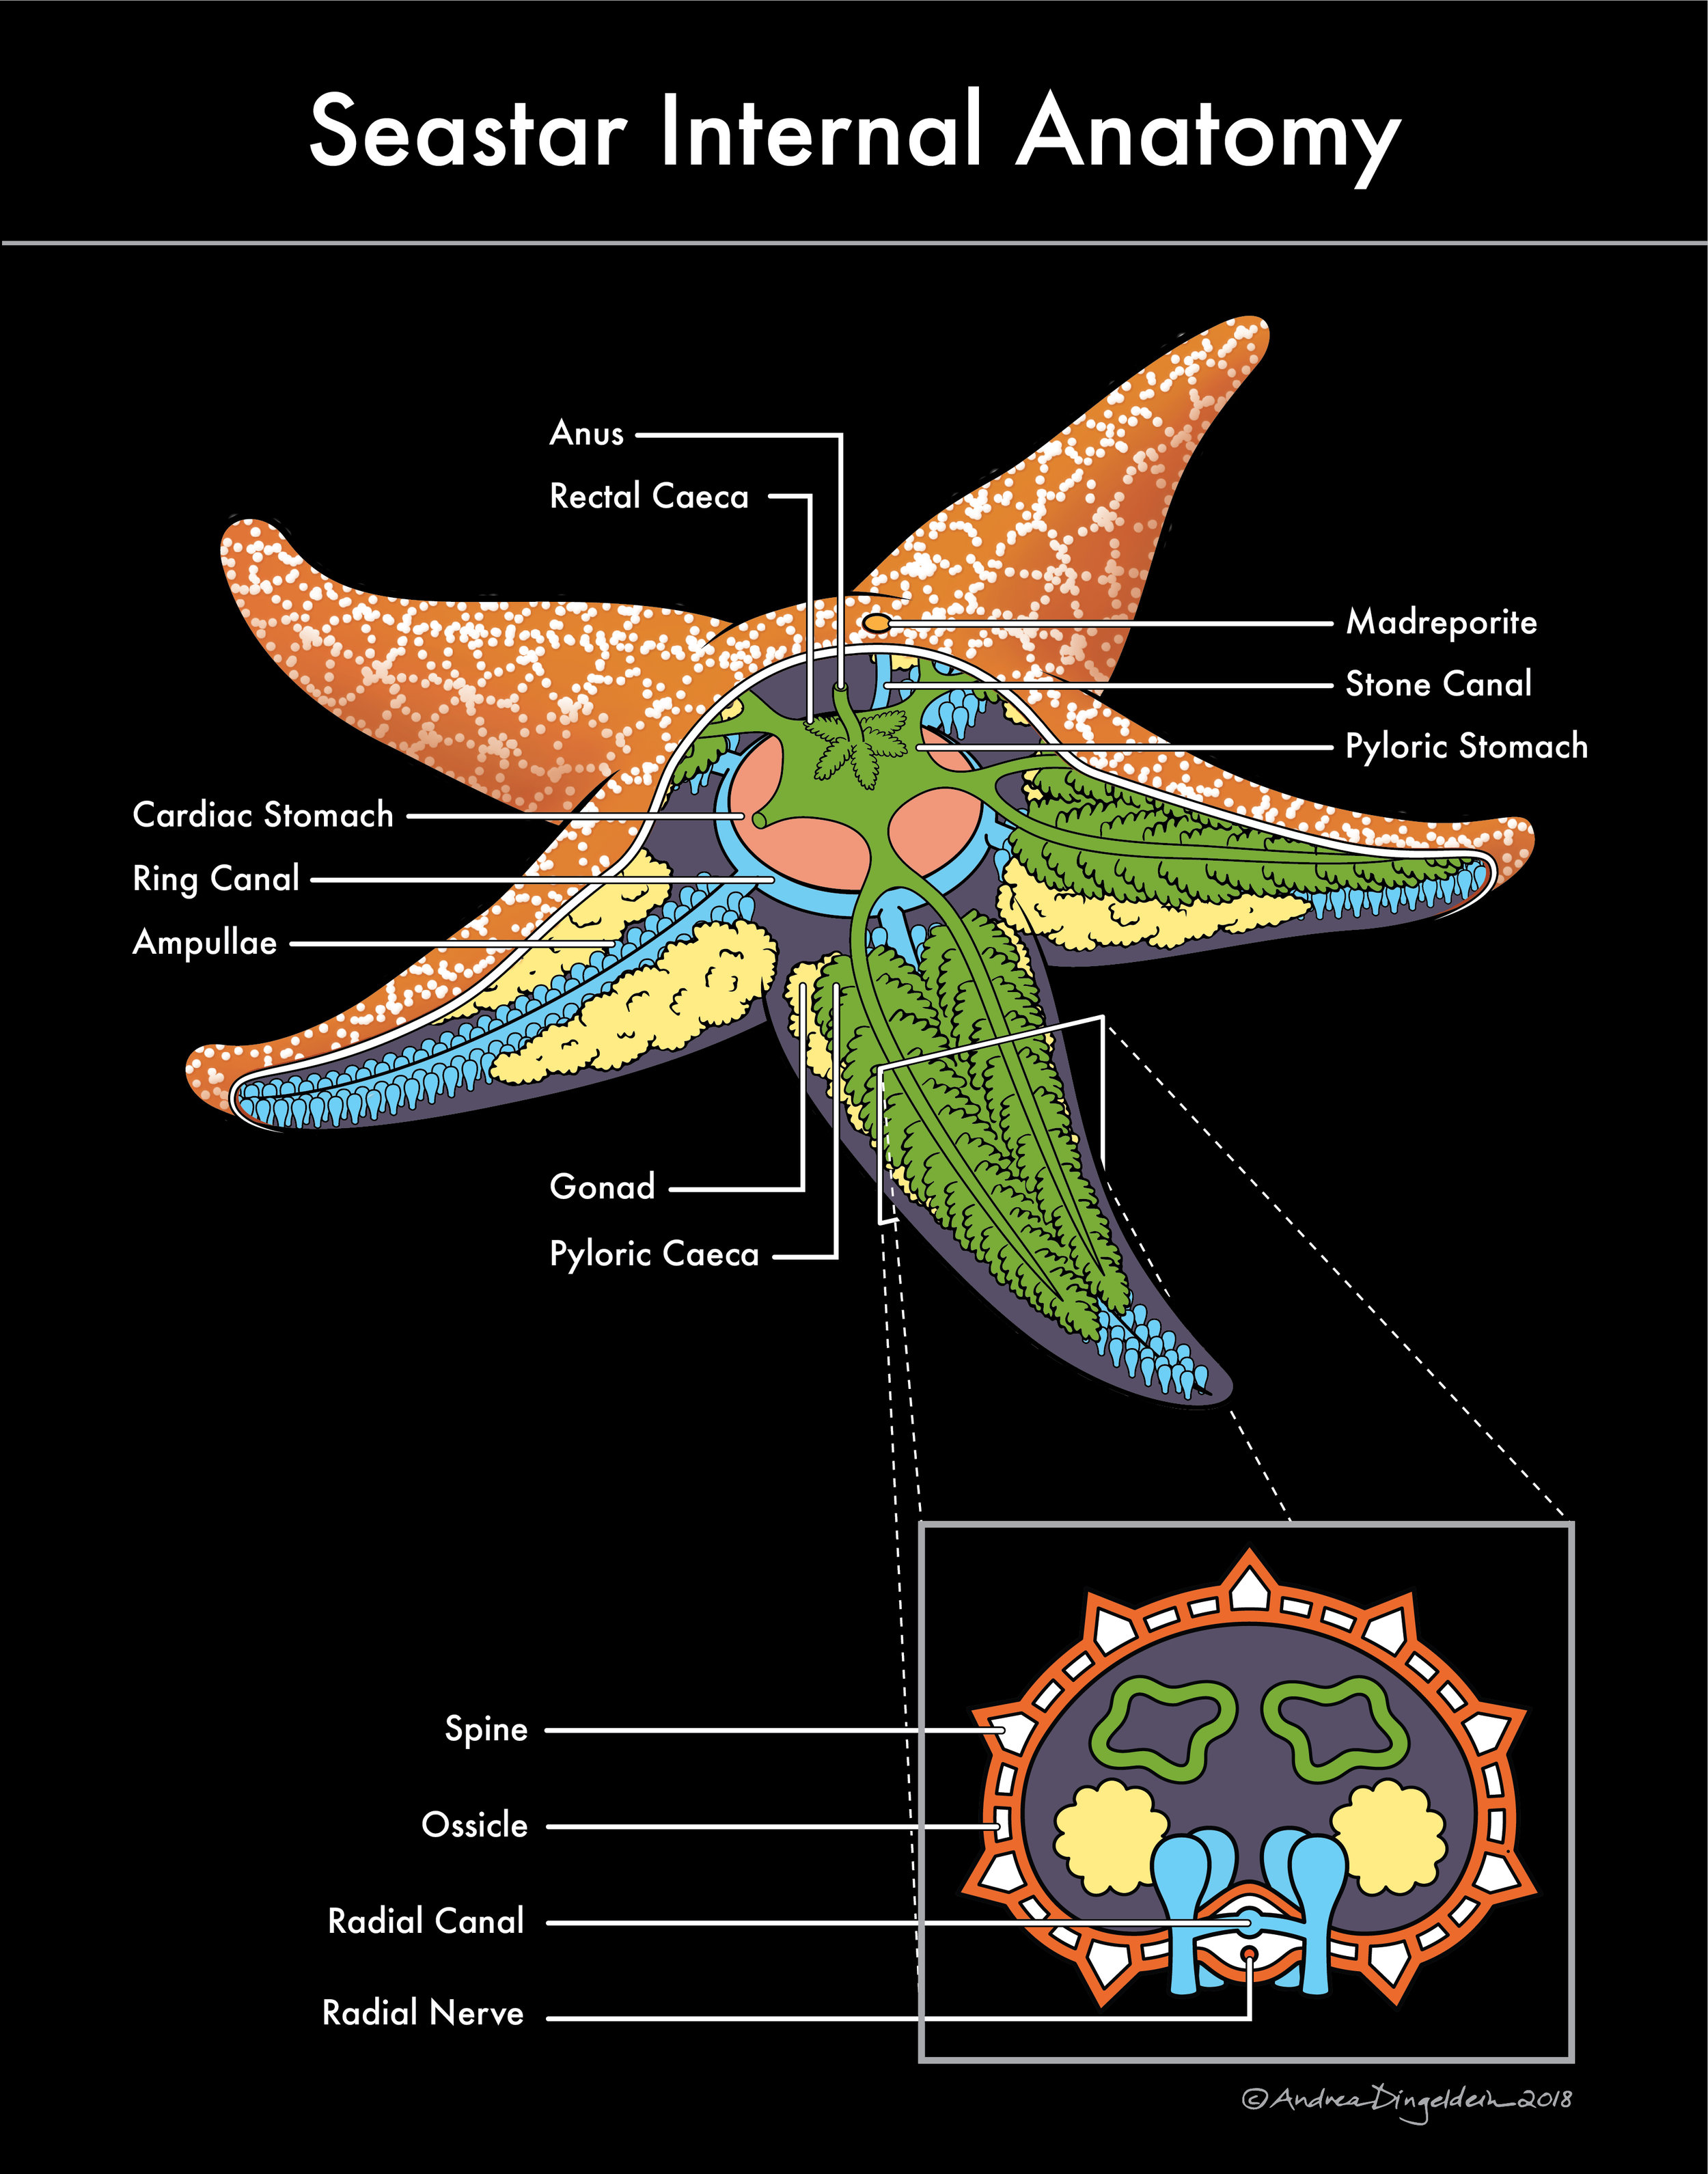 Seastar Internal Anatomy